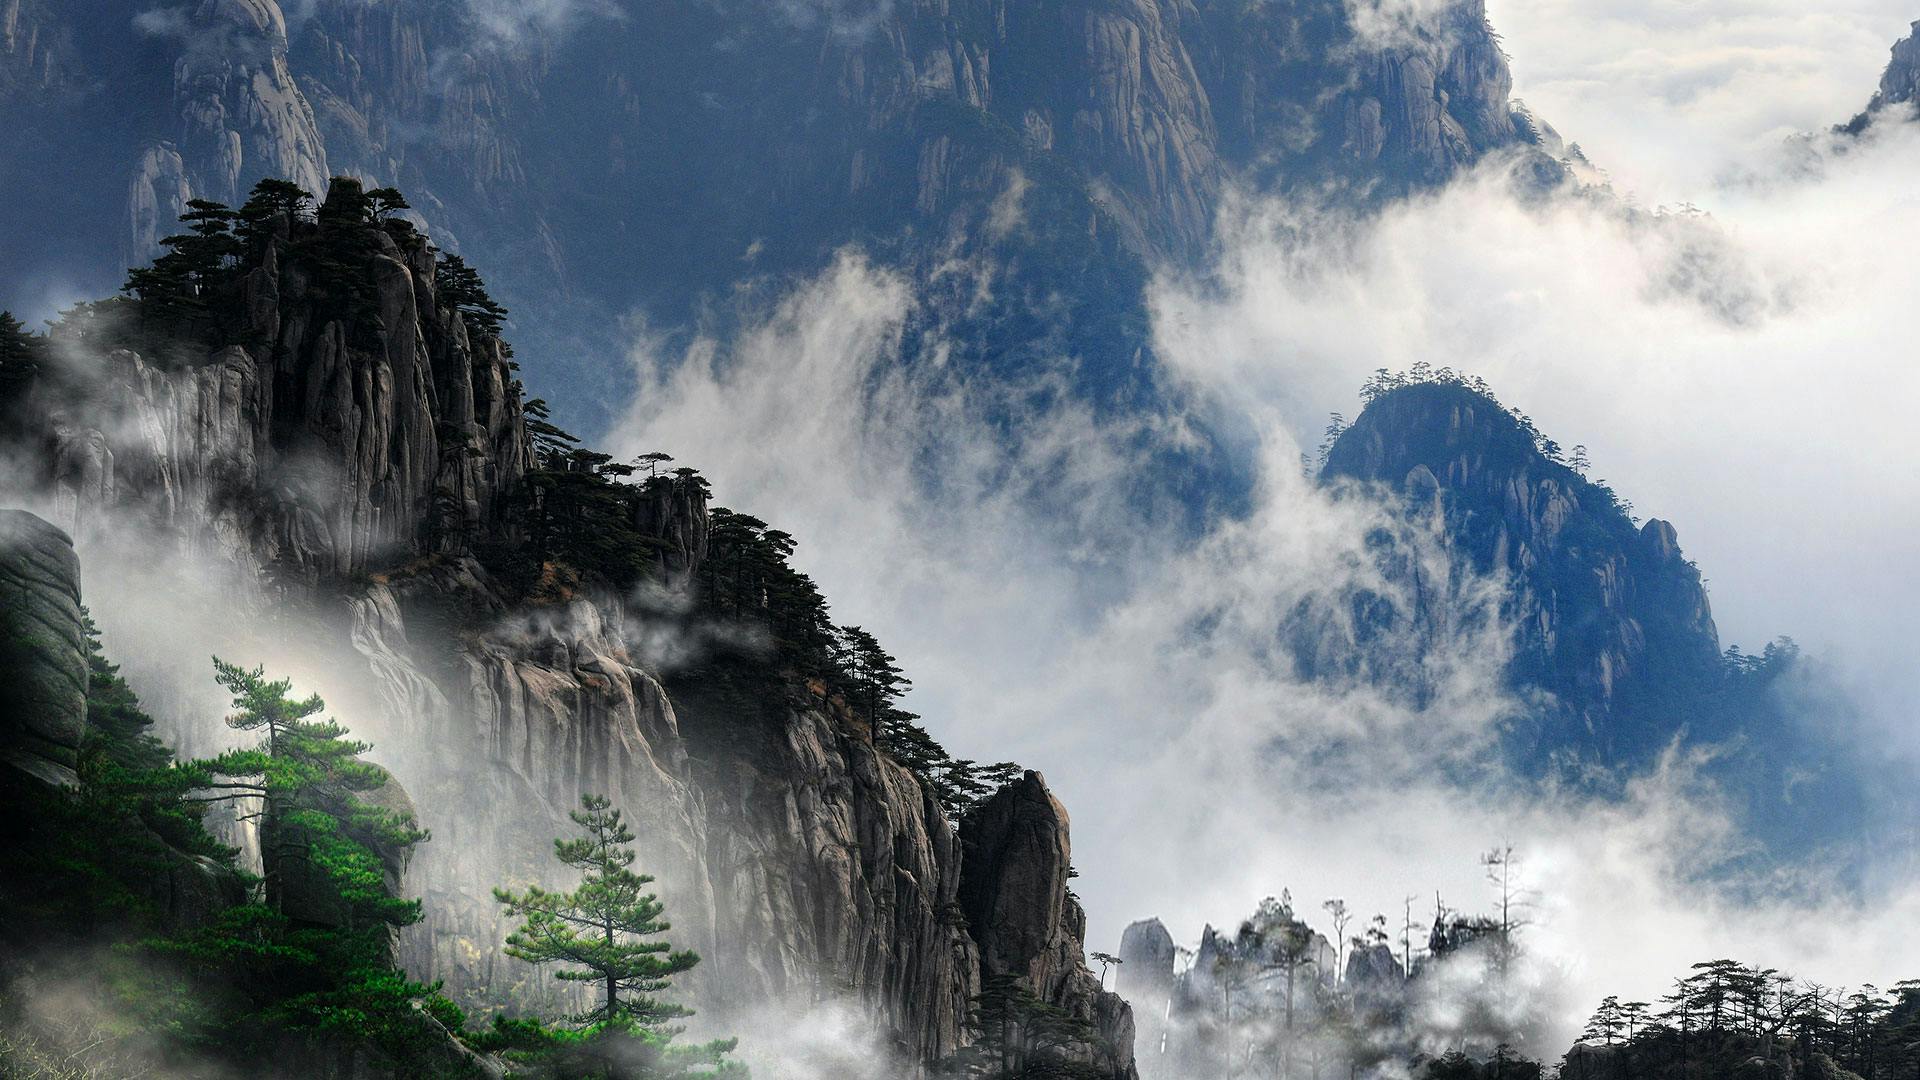 A misty rocky mountain (Huangshan Mountain)